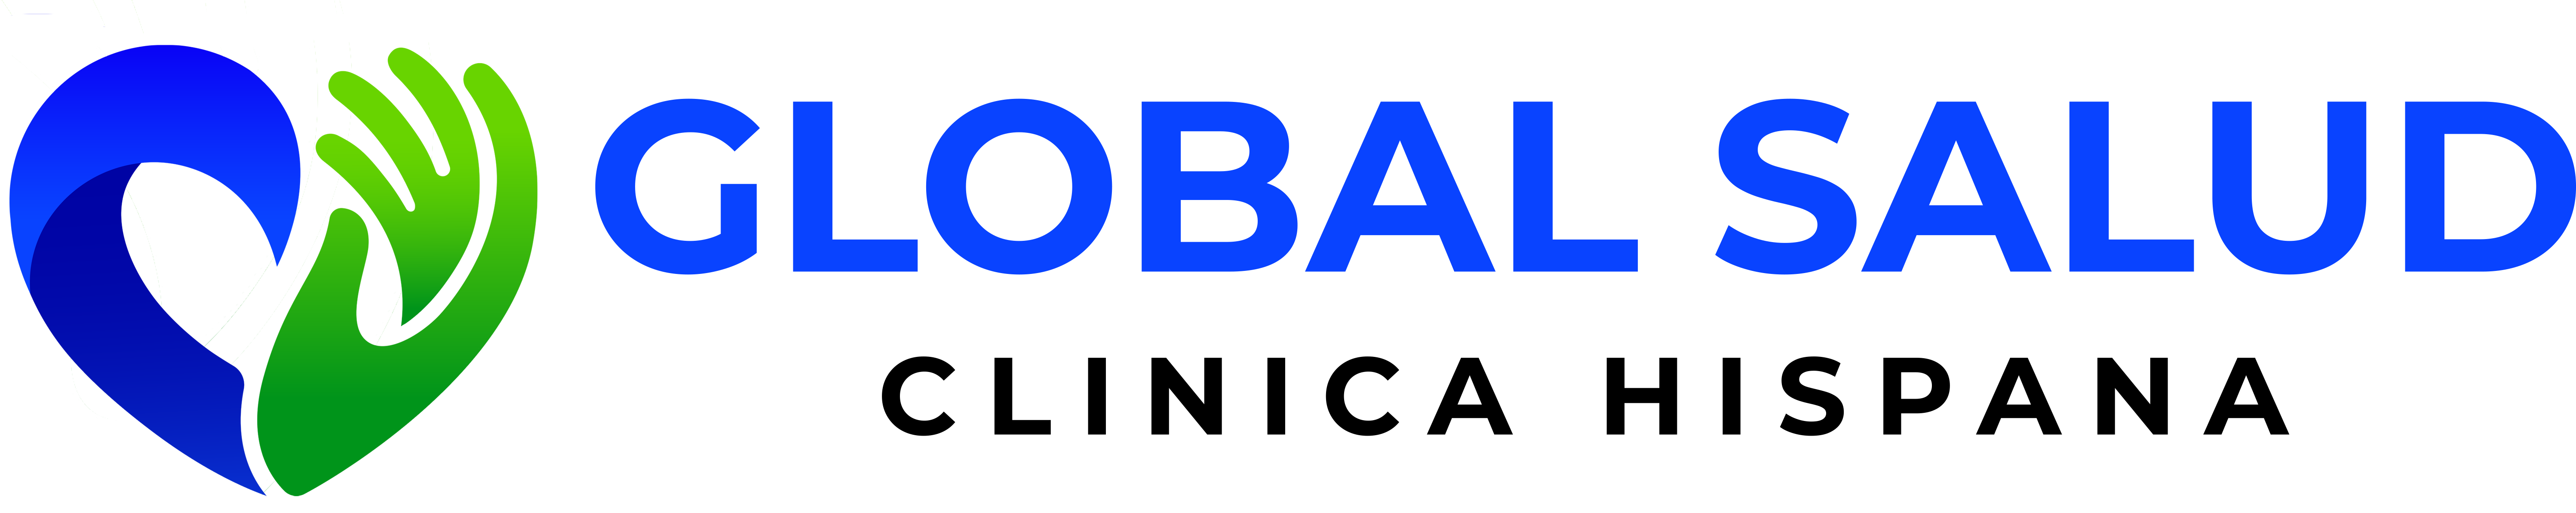 Global Salud Clinica Hispana logo